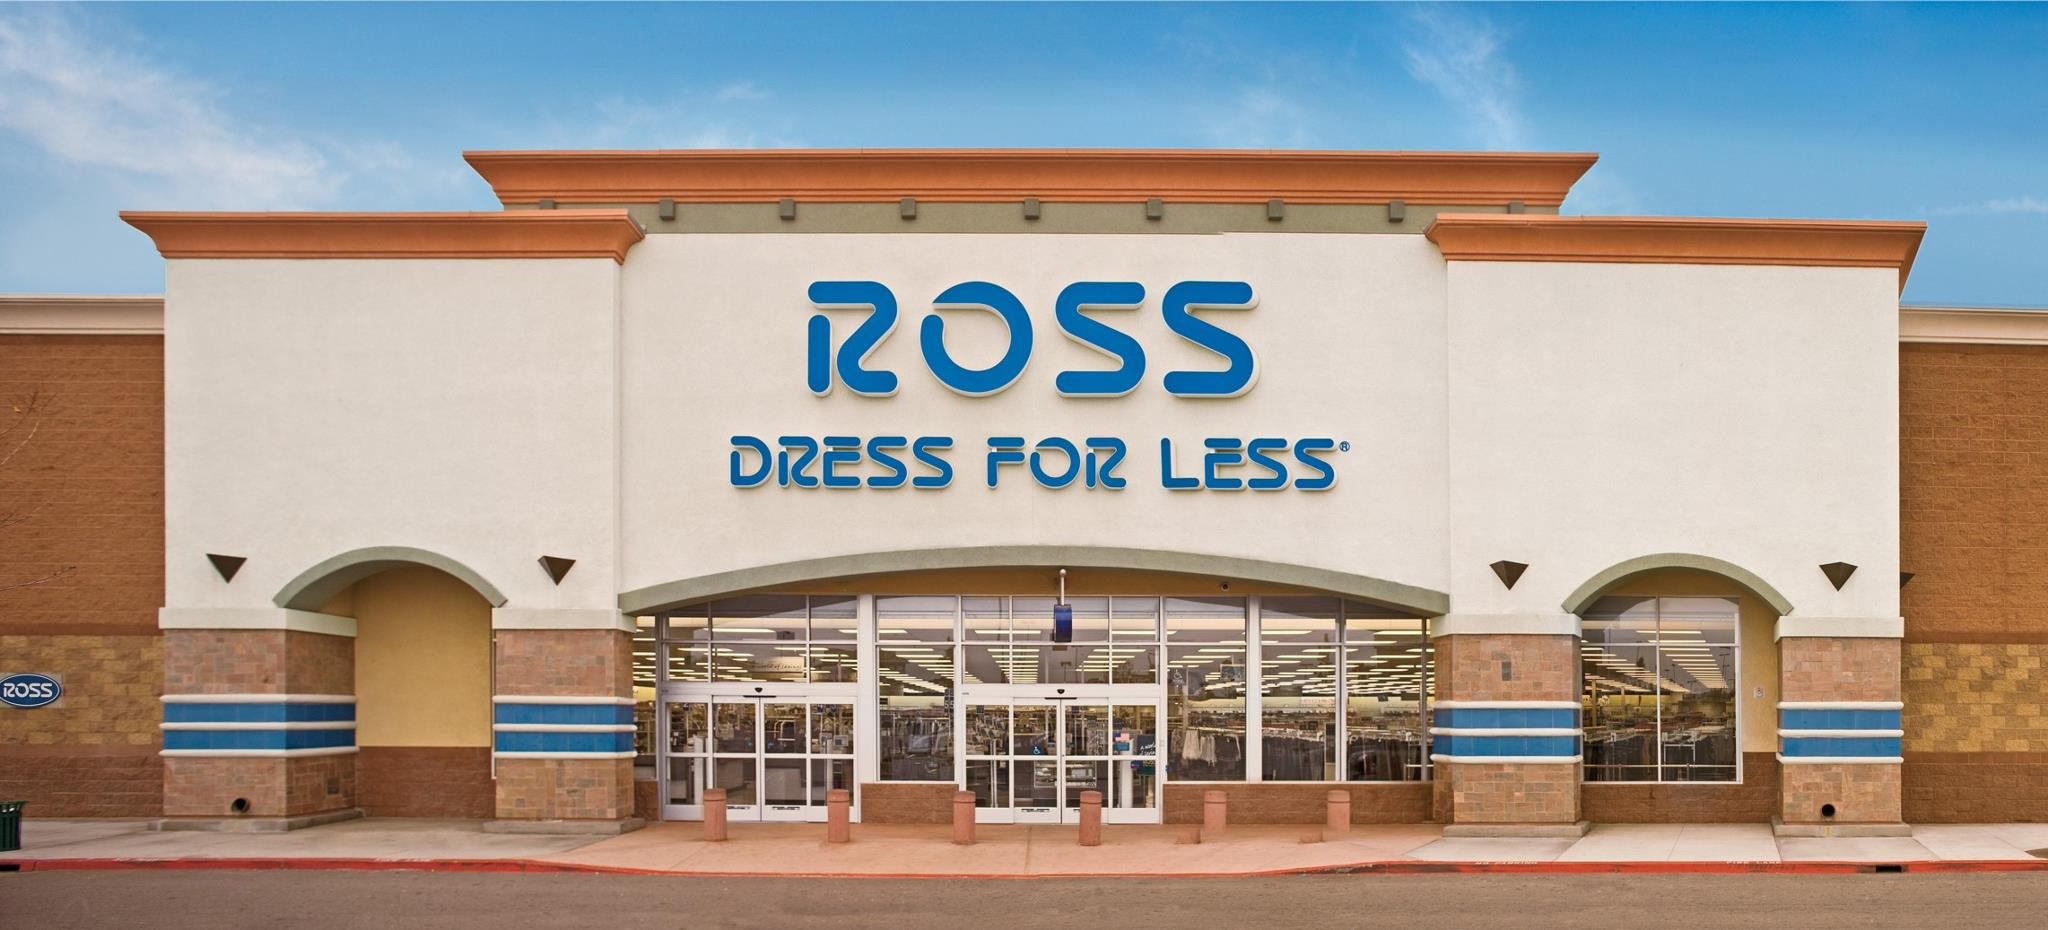 Ross Store Donations - Urban Awareness USA